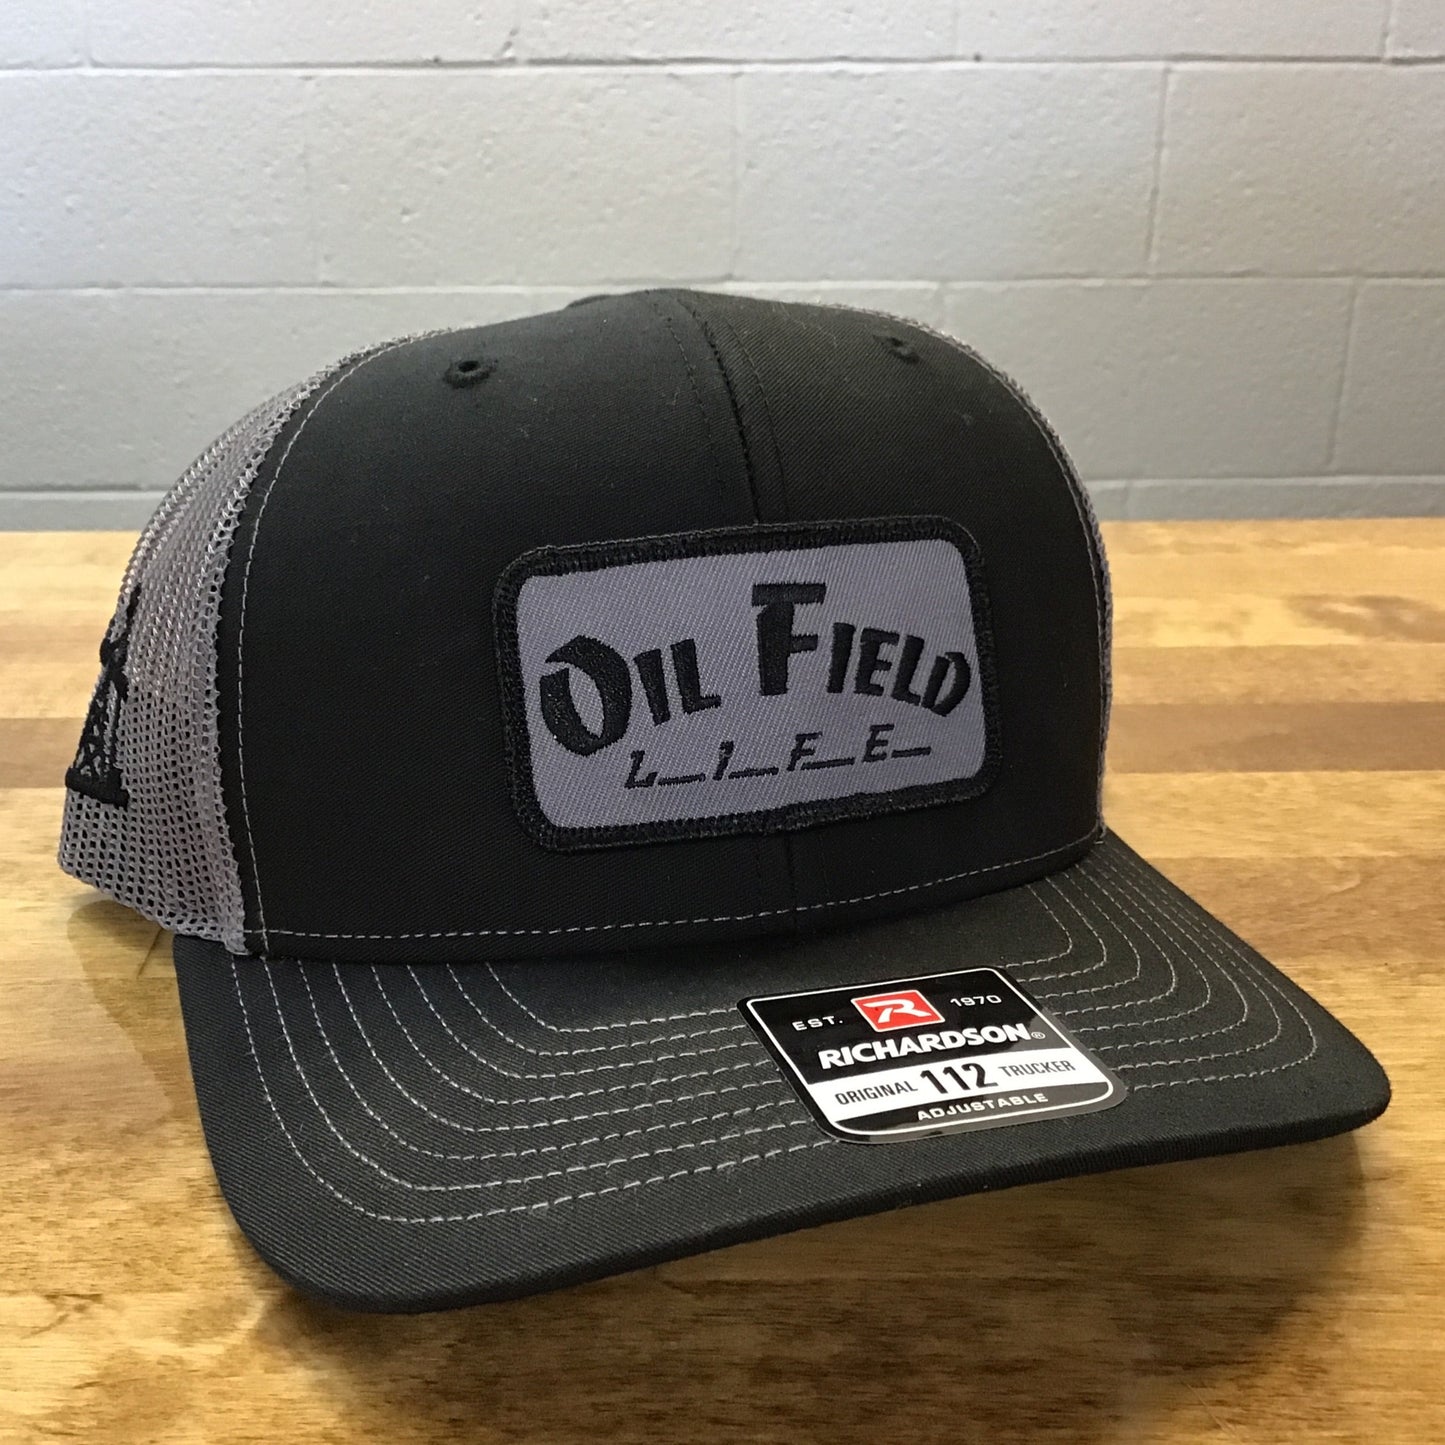 Ten Star Oil Field Life Black/Grey Patch Caps